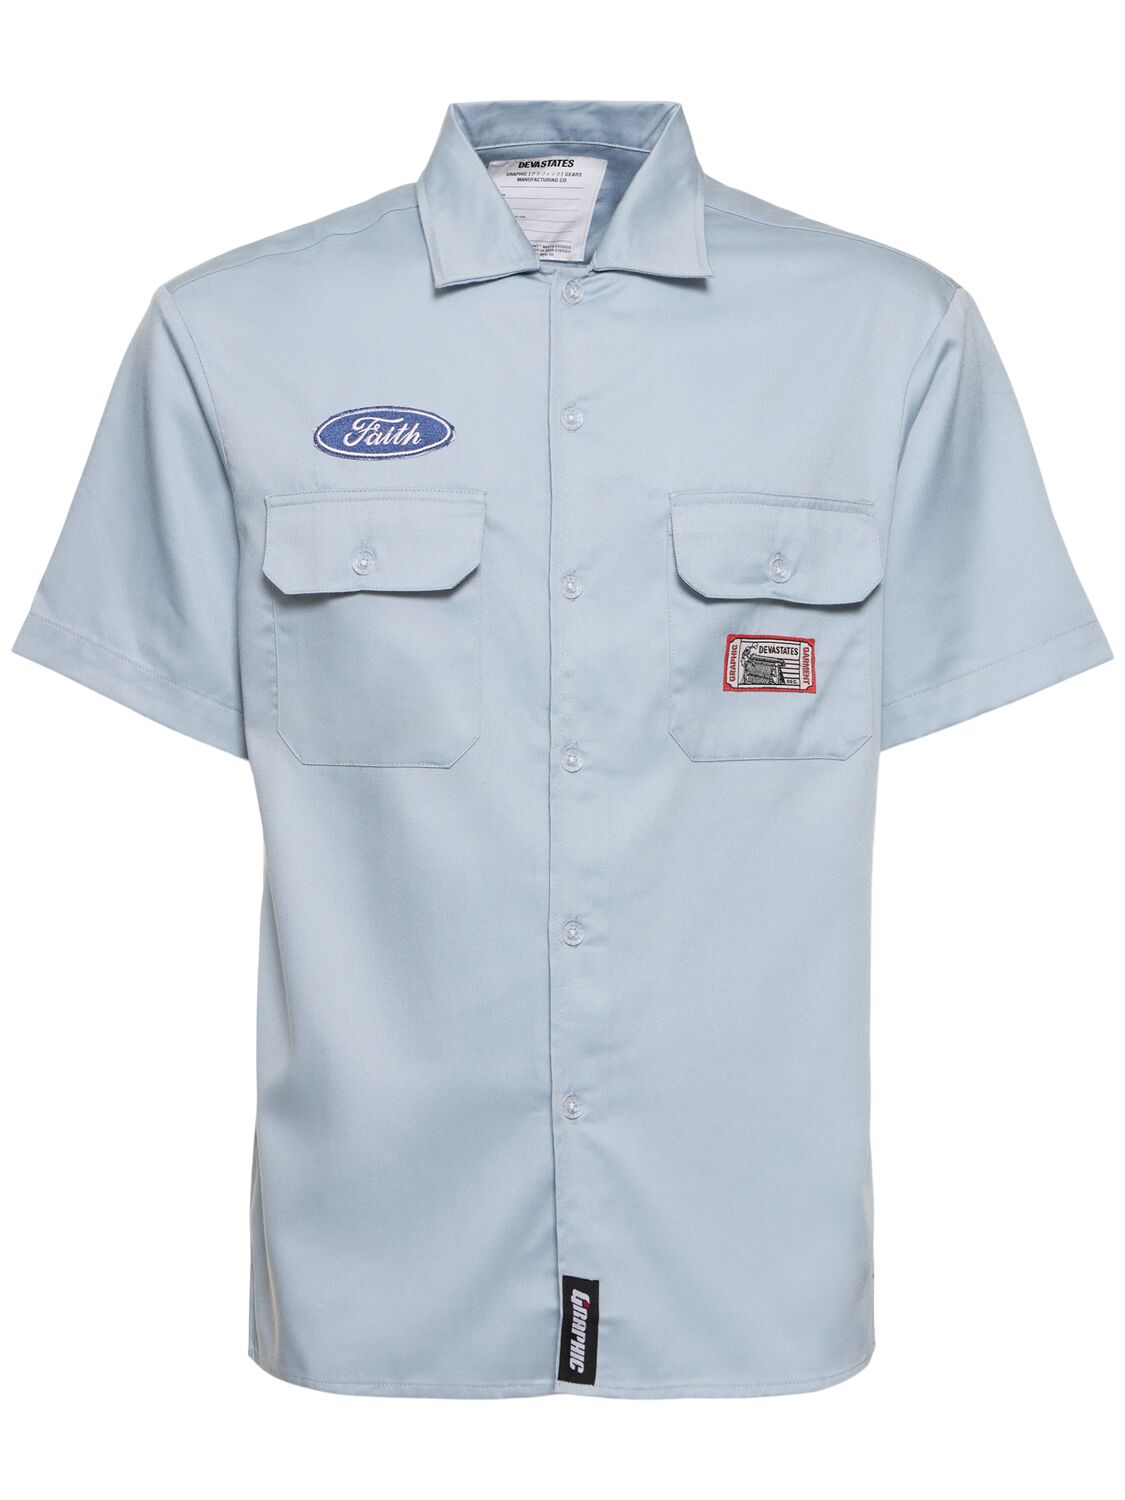 Deva States Fuel Short Sleeve Work Shirt In Blue